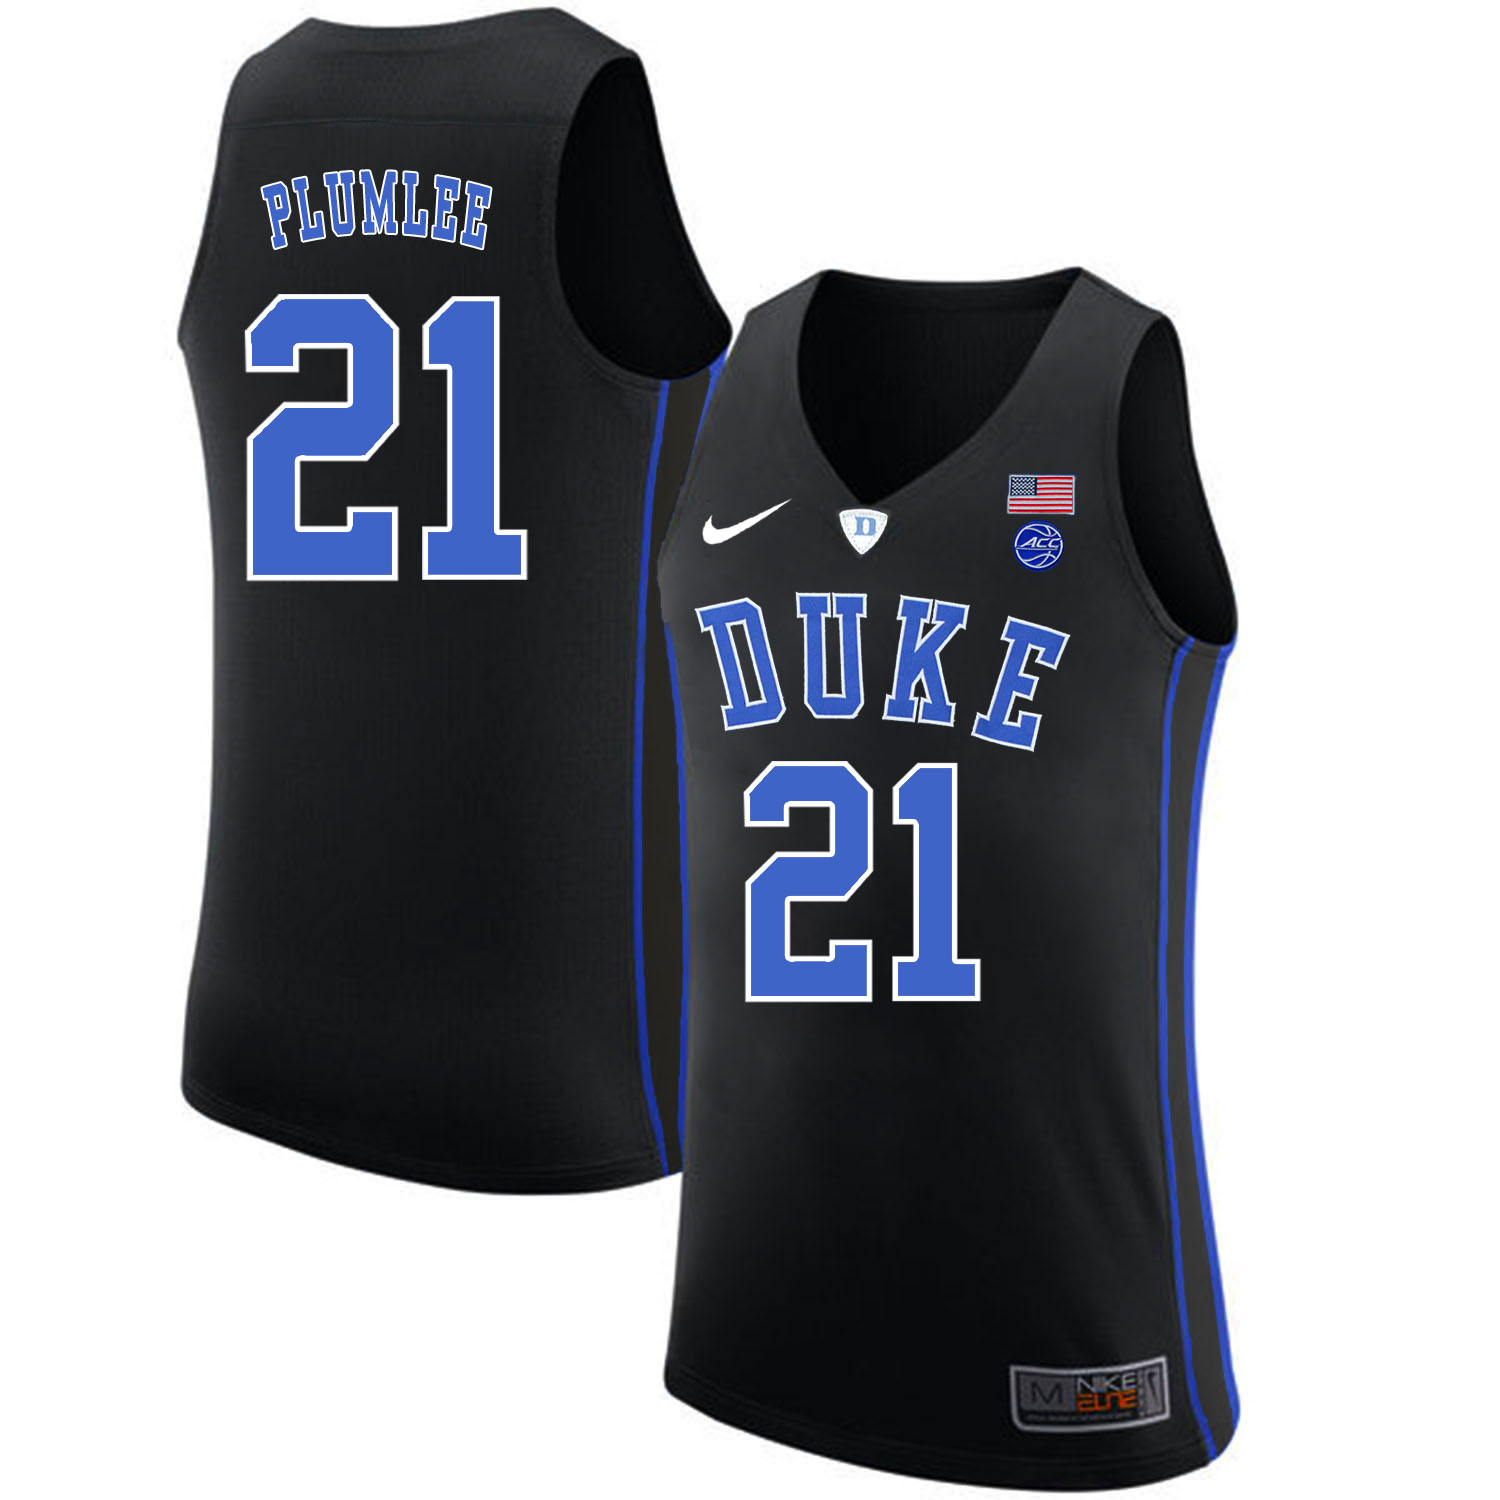 Duke Blue Devils 21 Miles Plumlee Black Nike College Basketball Jersey